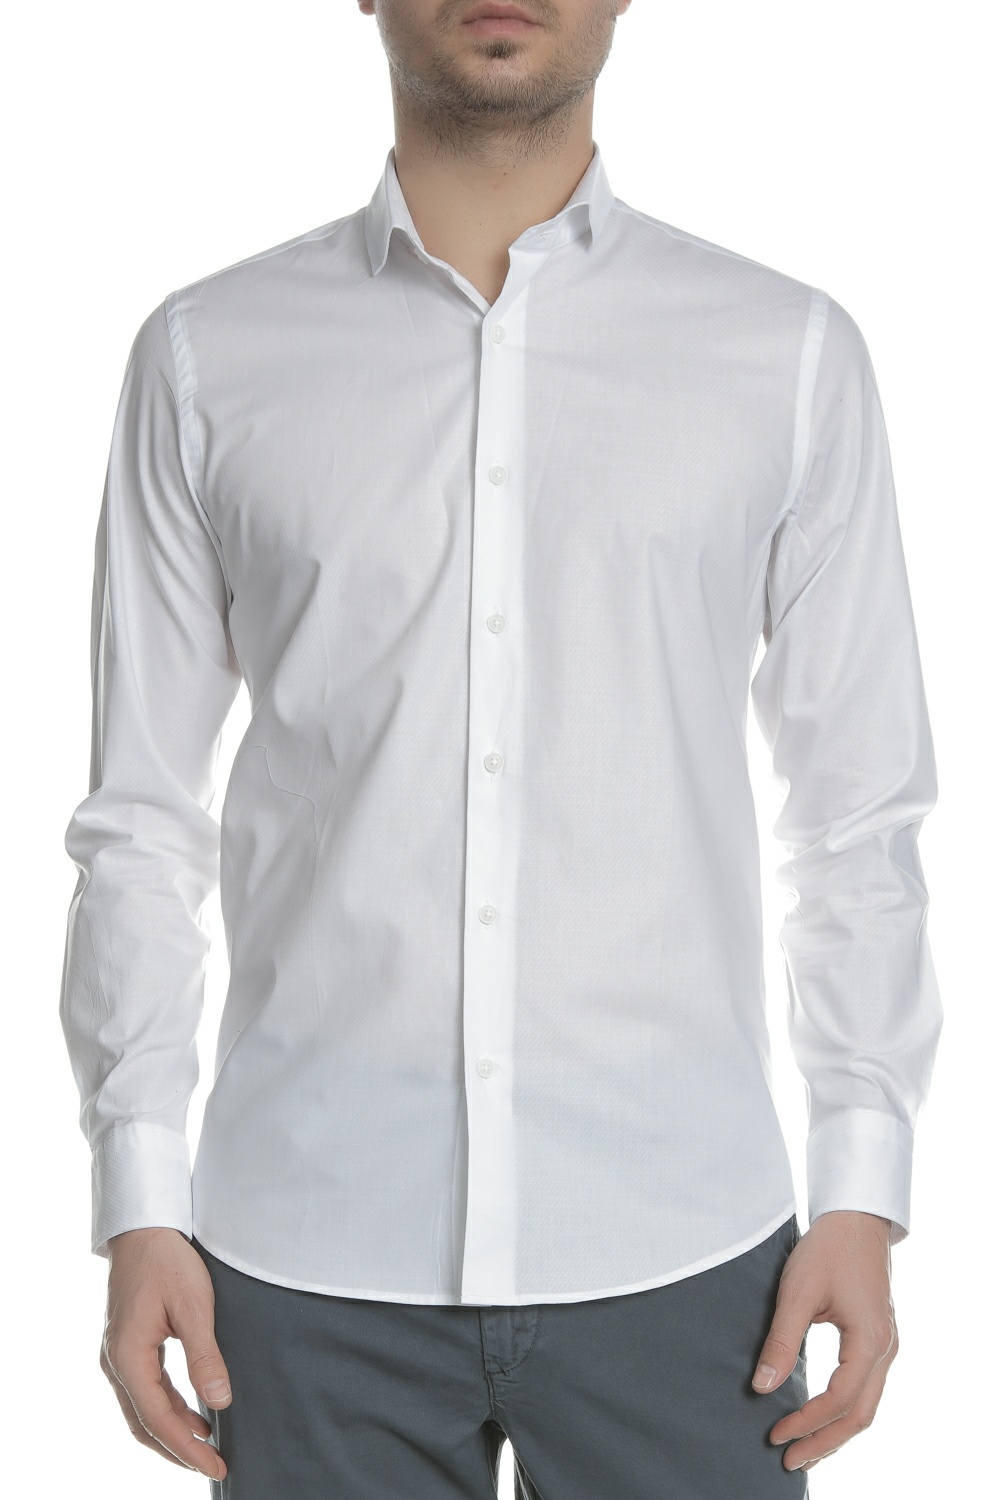 SSEINSE - Ανδρικό μακρυμάνικο πουκάμισο SSEINSE λευκό Ανδρικά/Ρούχα/Πουκάμισα/Μακρυμάνικα